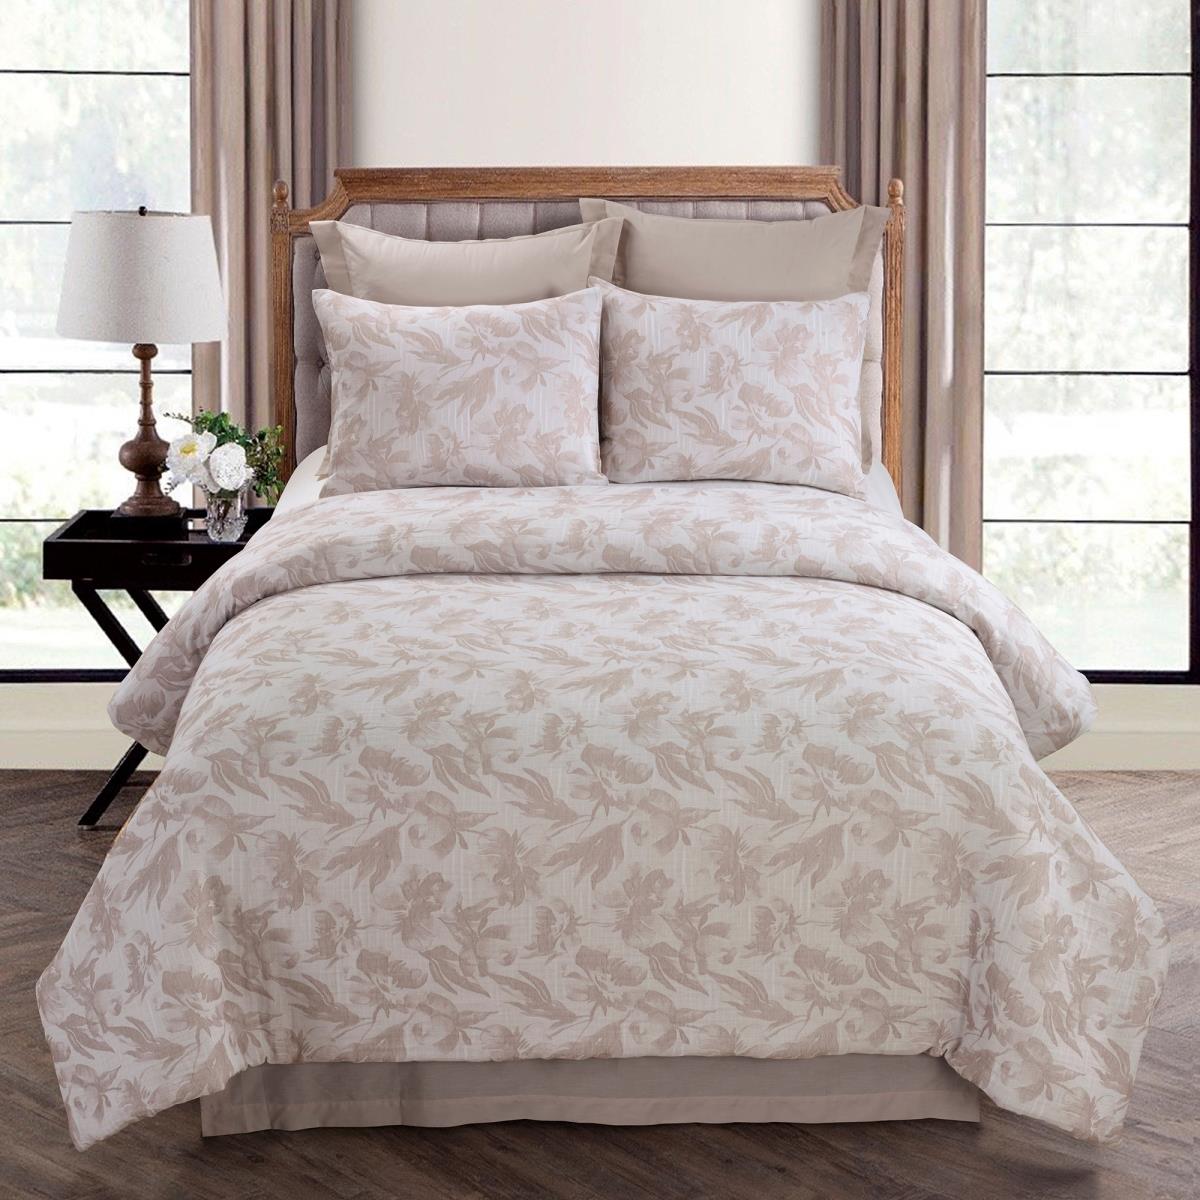 Y00432 Queen Size Comforter Set - Almaria Blush